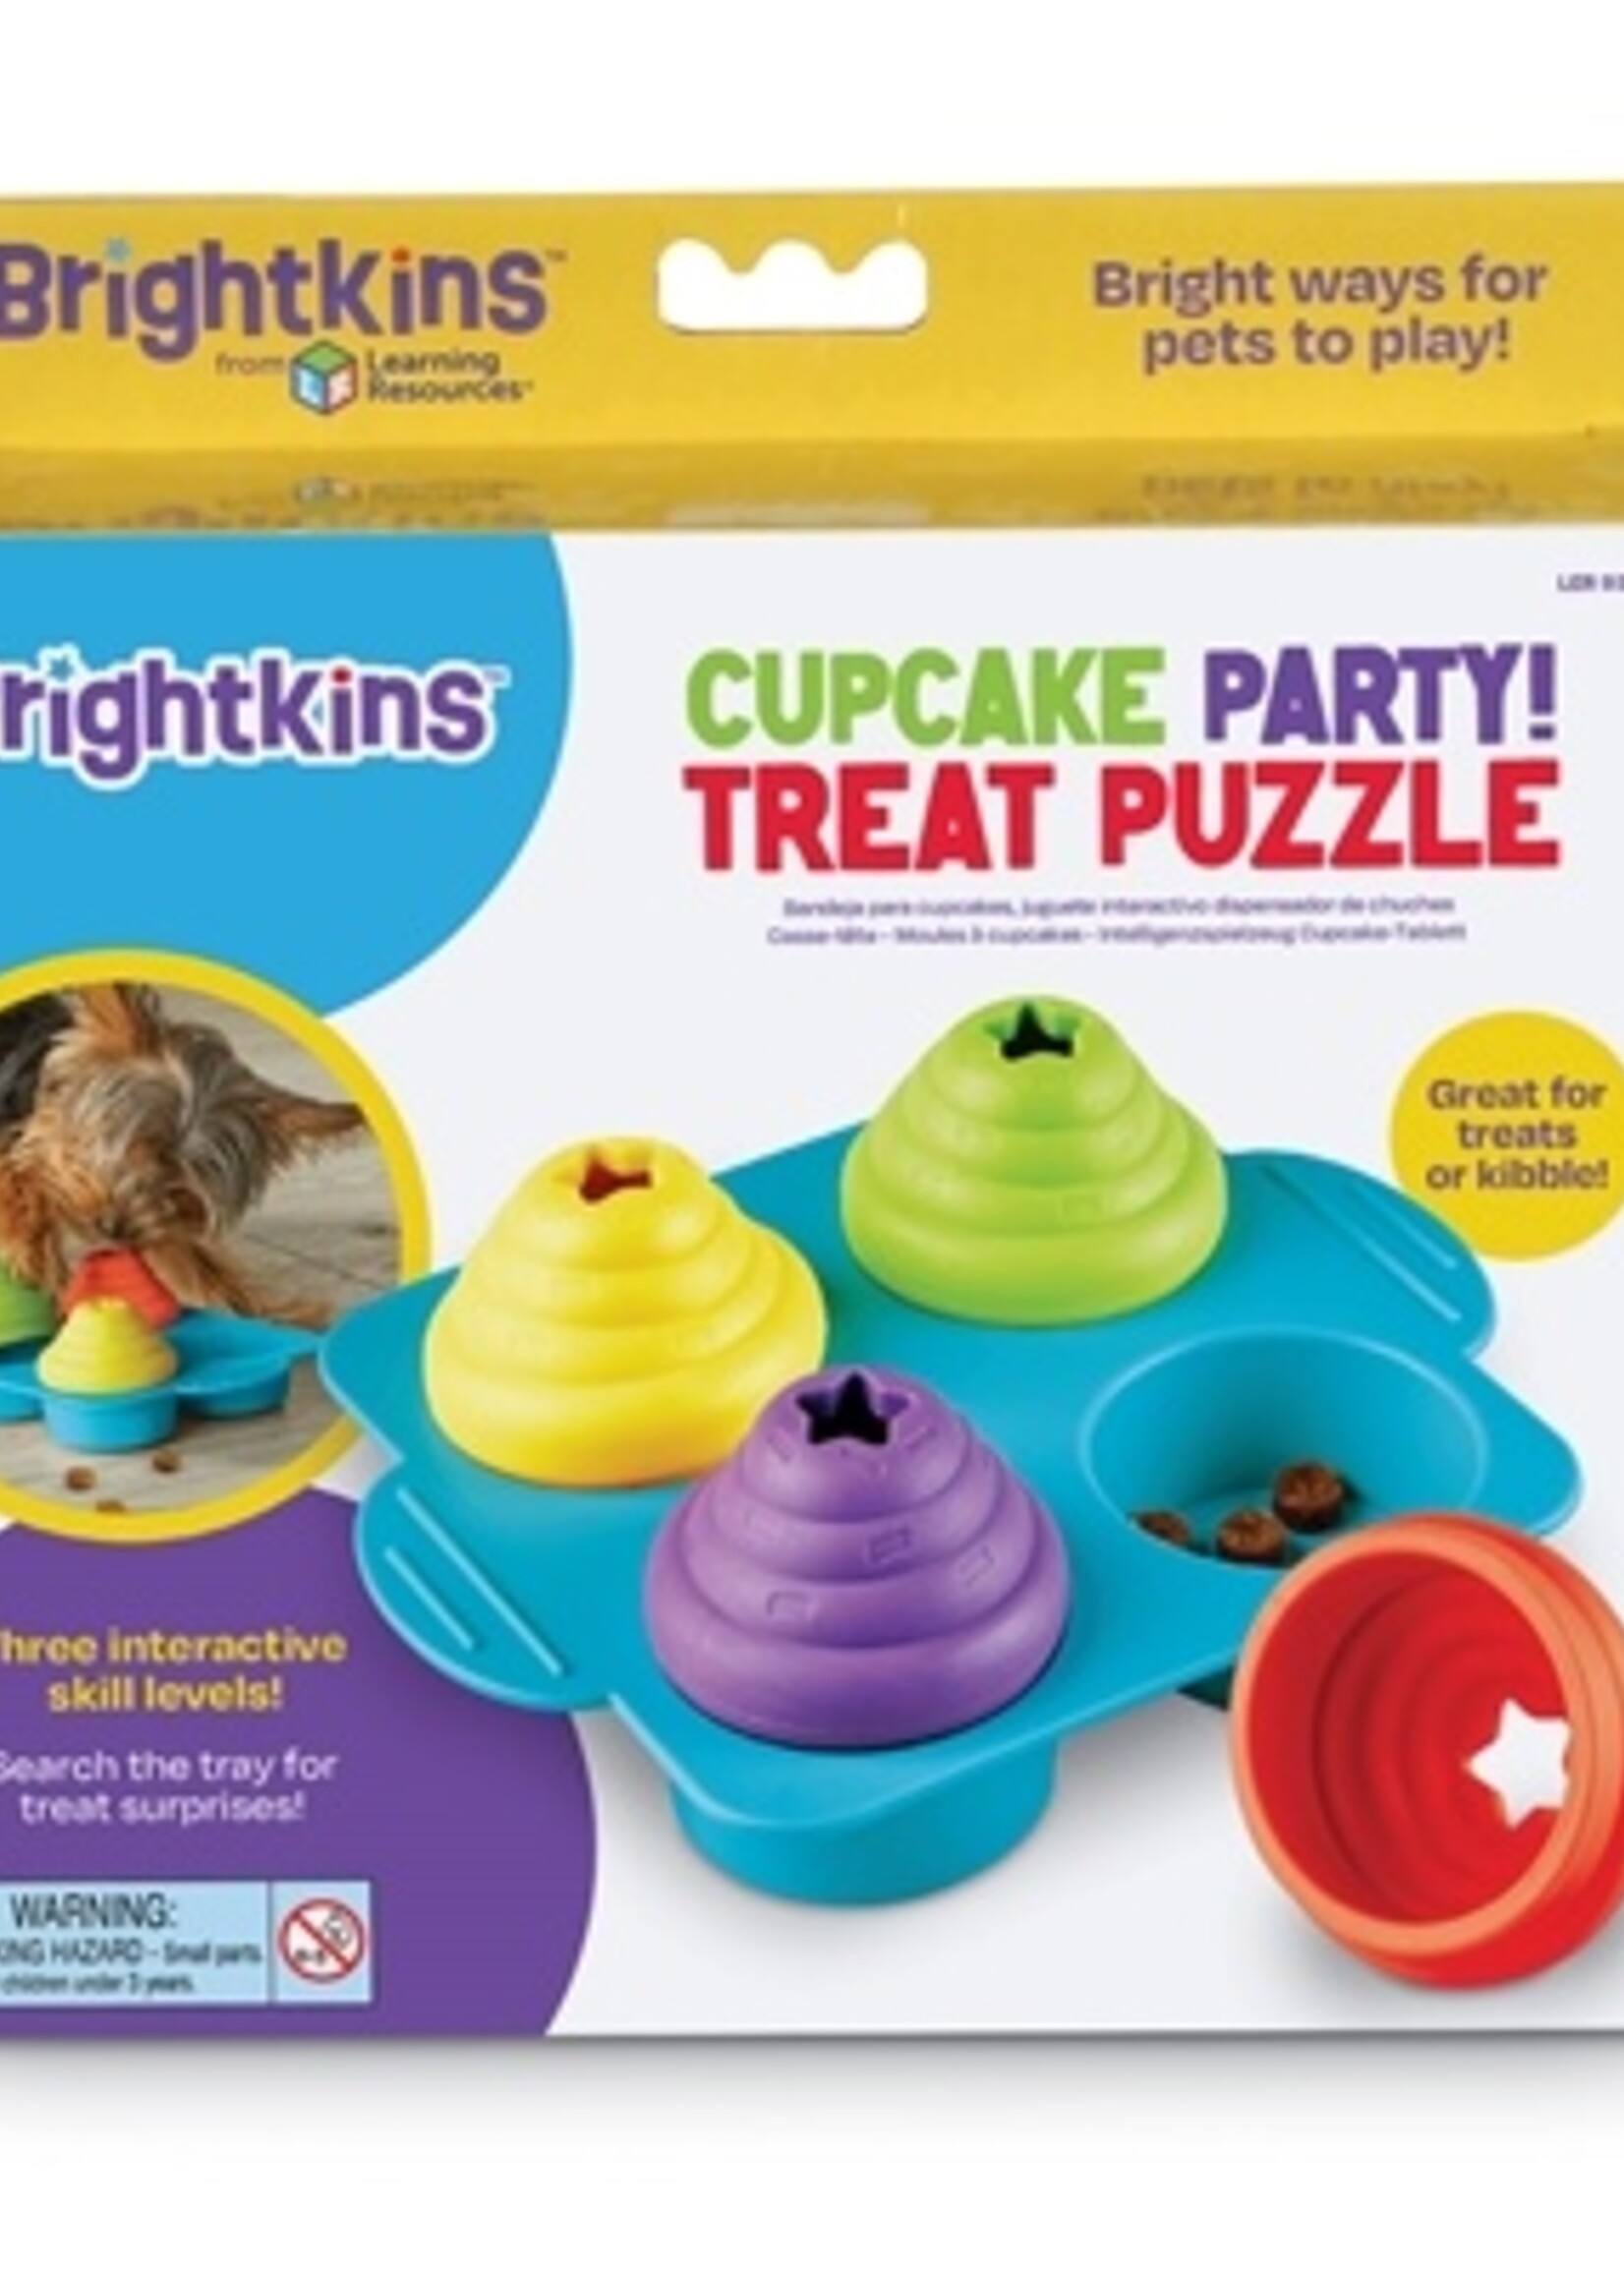 Brightkins Brightkins cupcake party treat puzzle